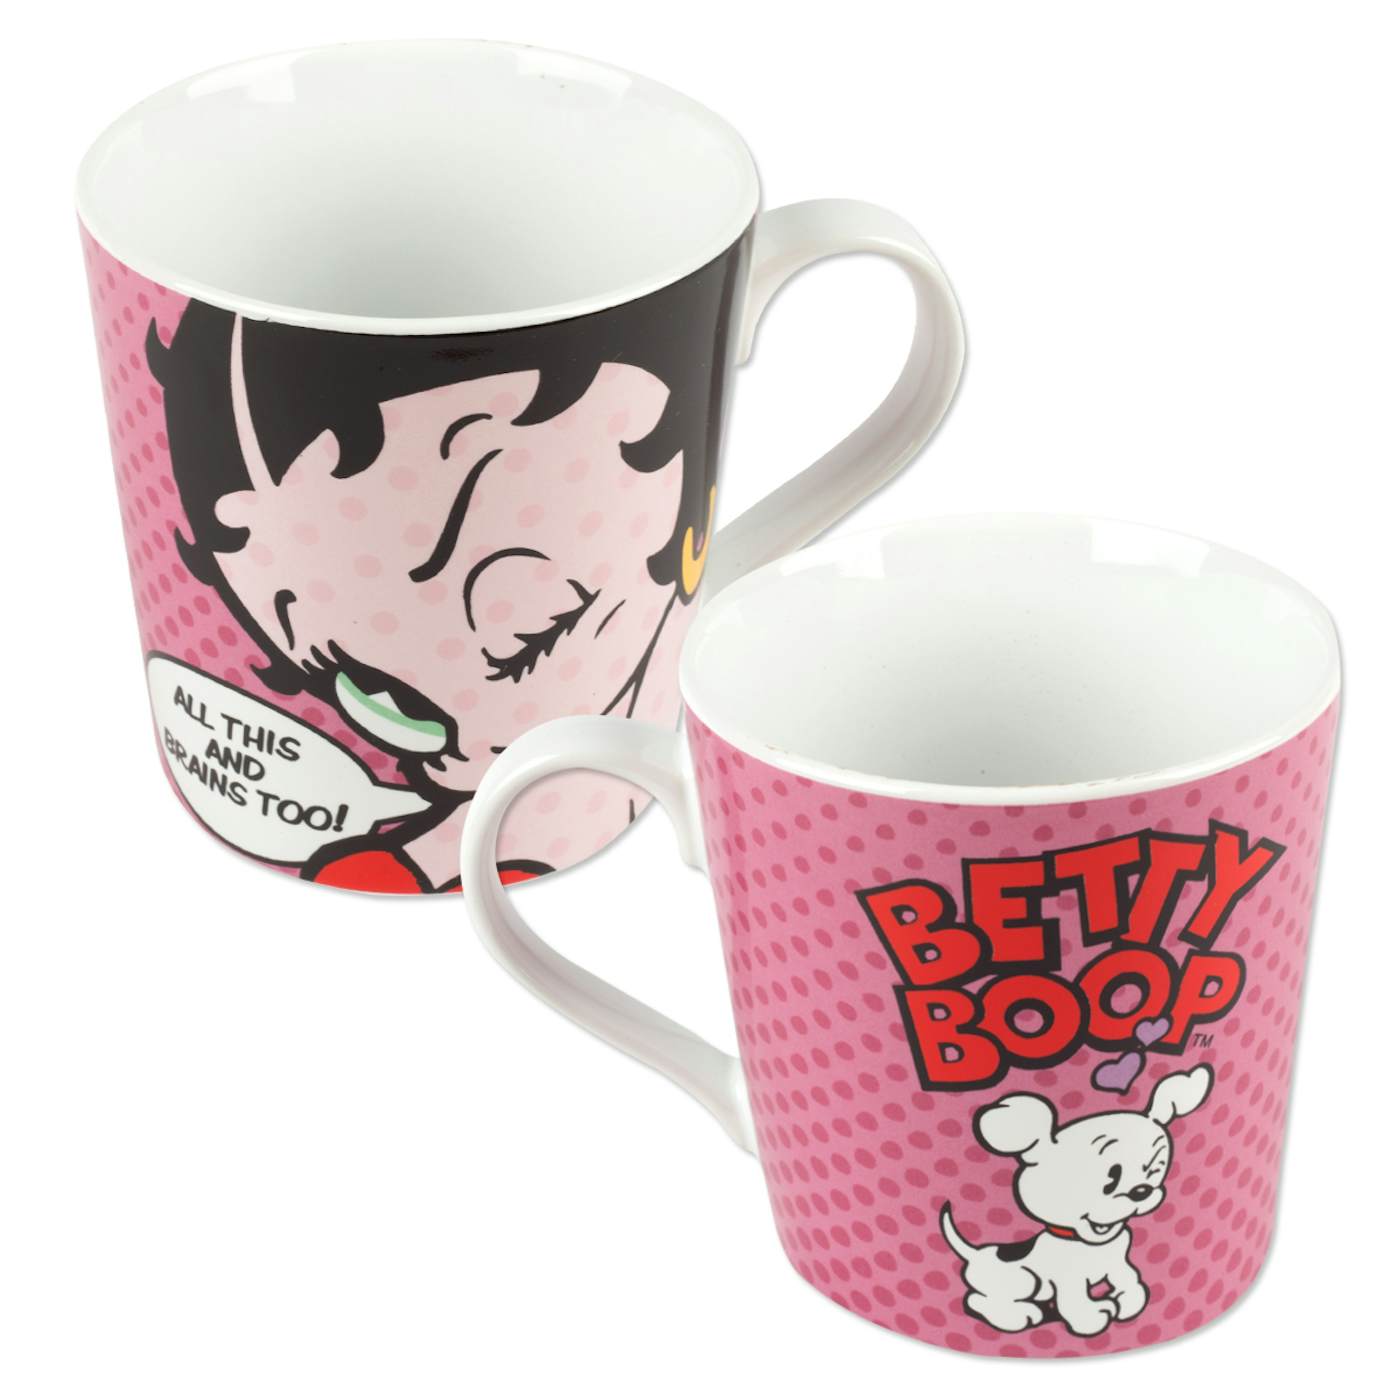 Betty Boop - All This and Brains Too 12 oz. Ceramic Mug